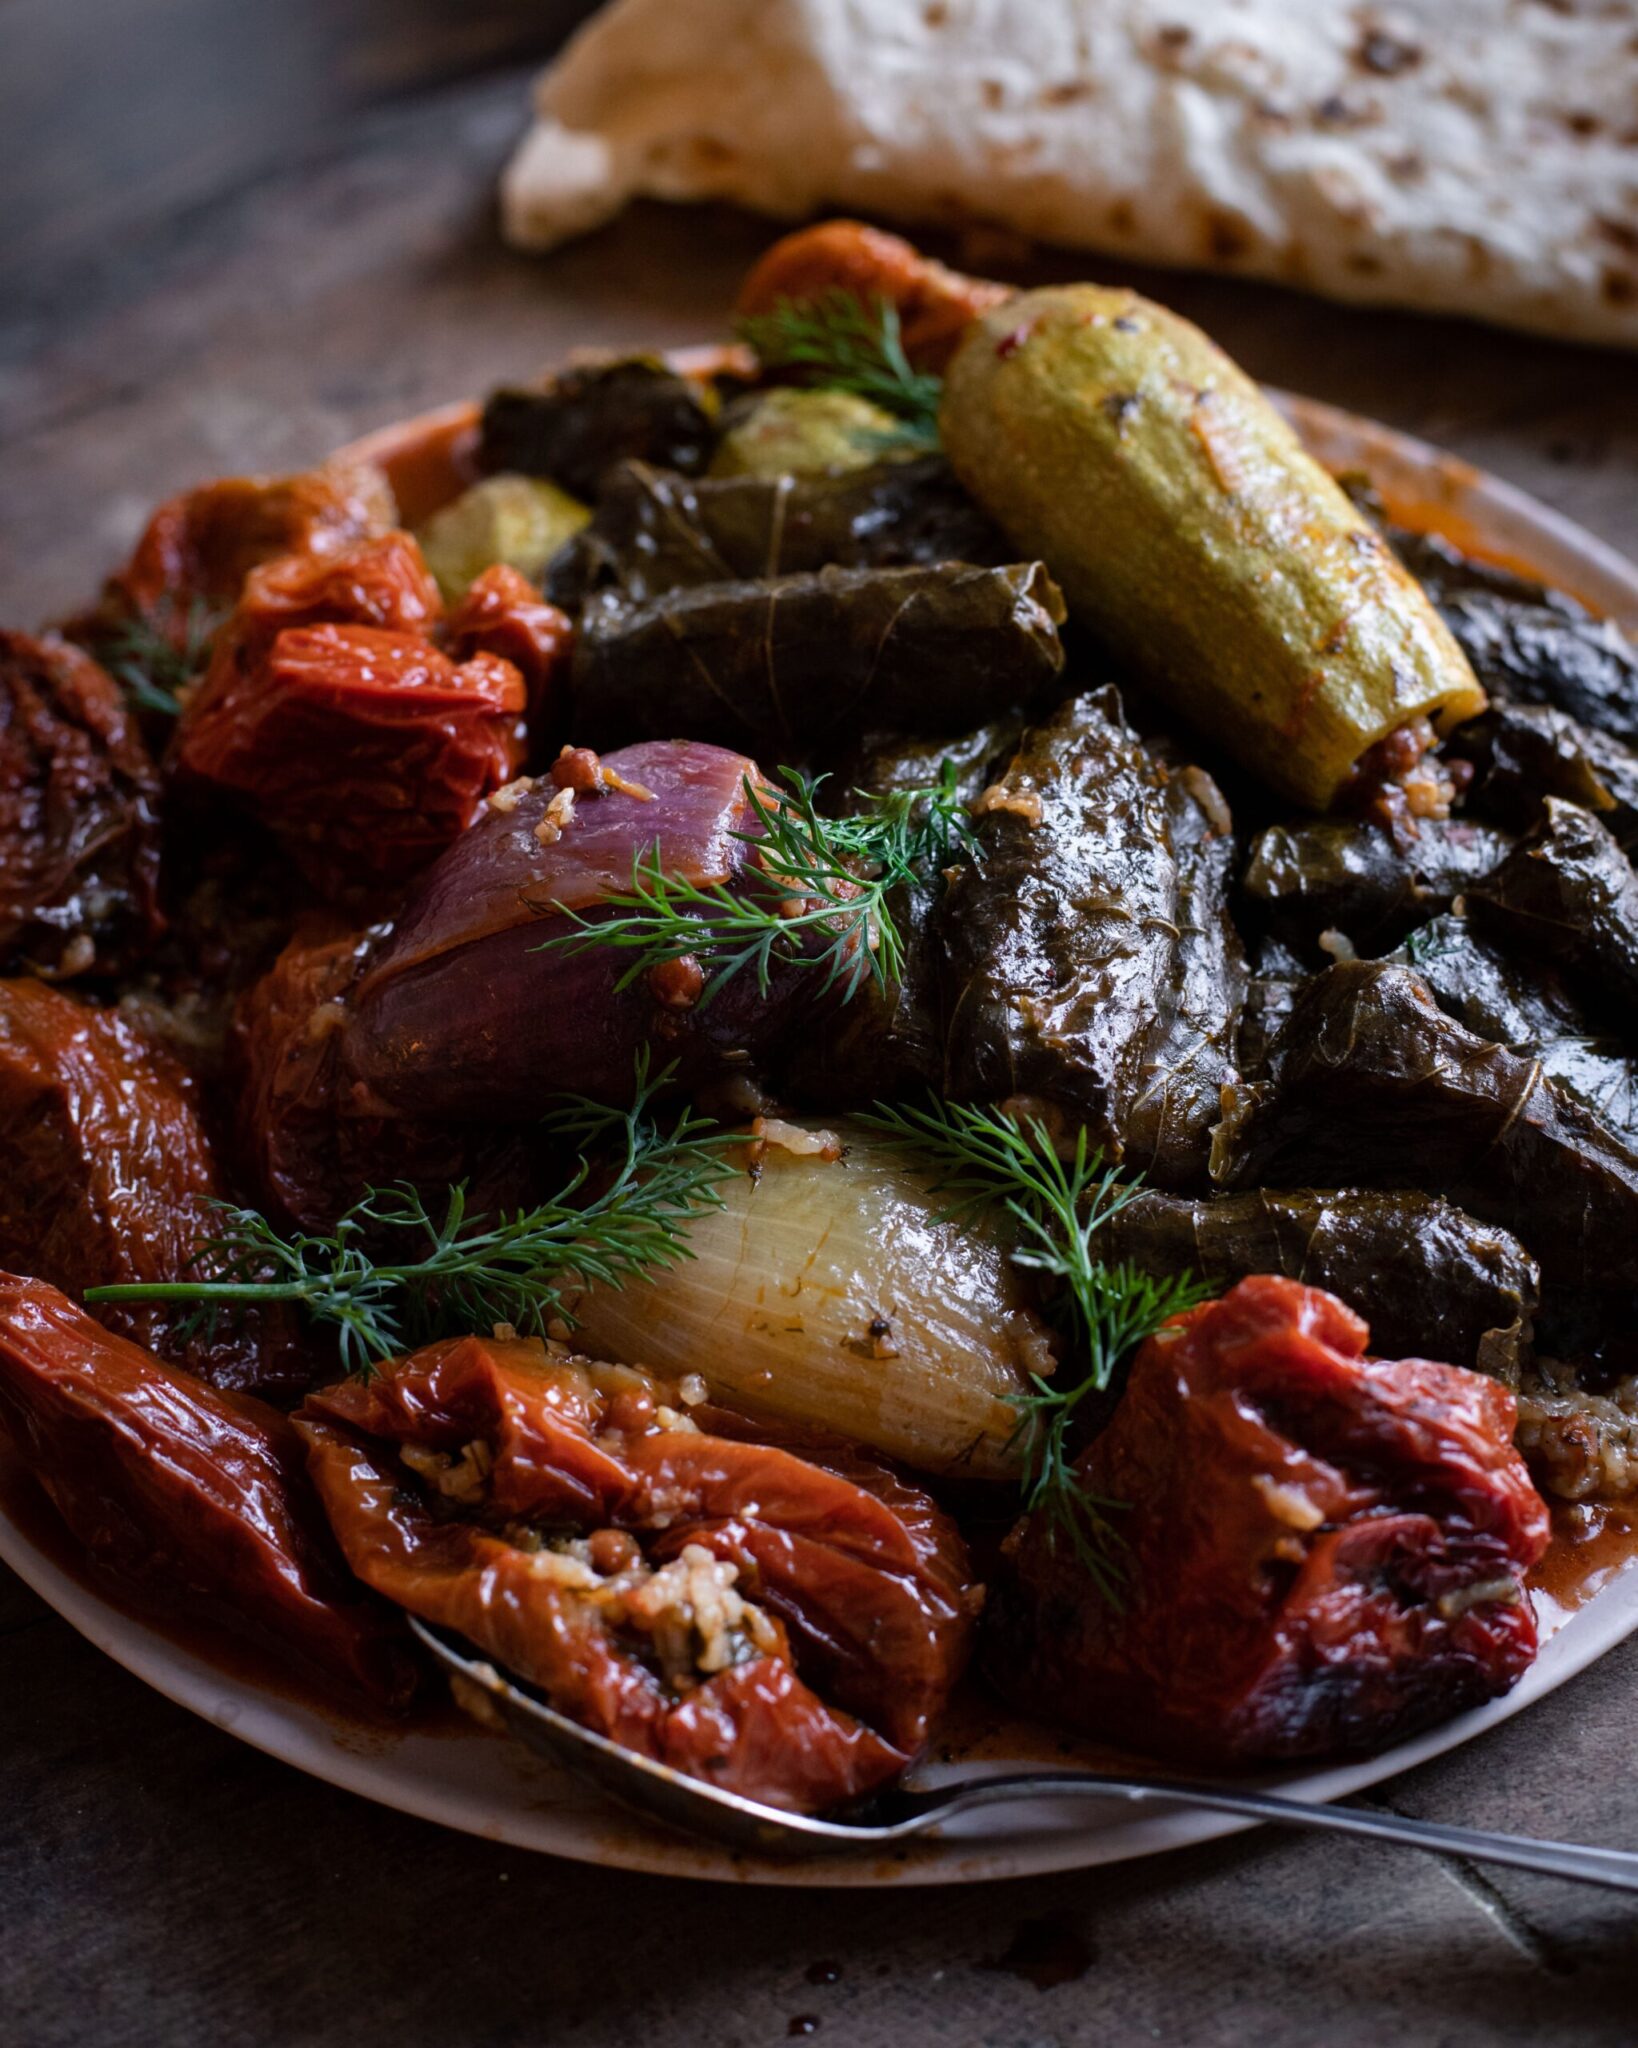 Vegan Kurdish Aprax / Dolma – Stuffed Vegetables with Herbed Aromatic Rice